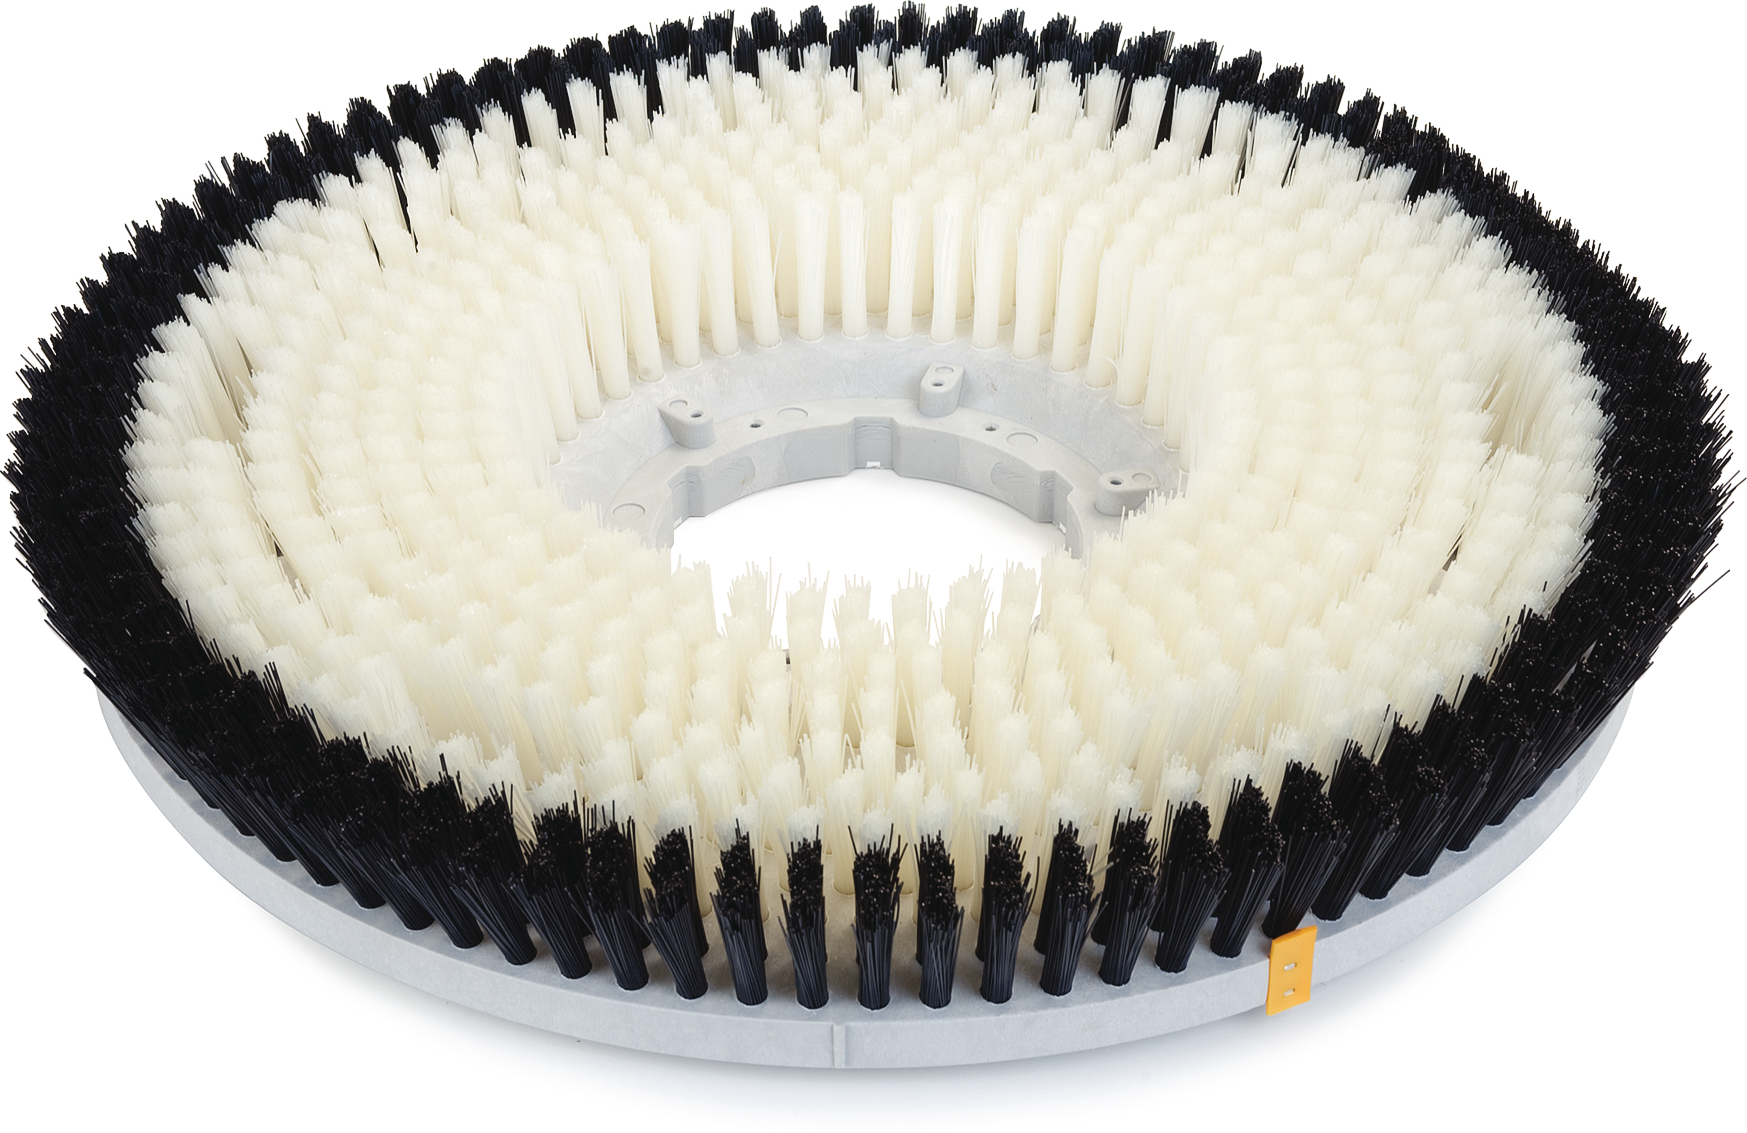 Colortech White-Black Karpet Kare Nylon Brush 14 - White-Black